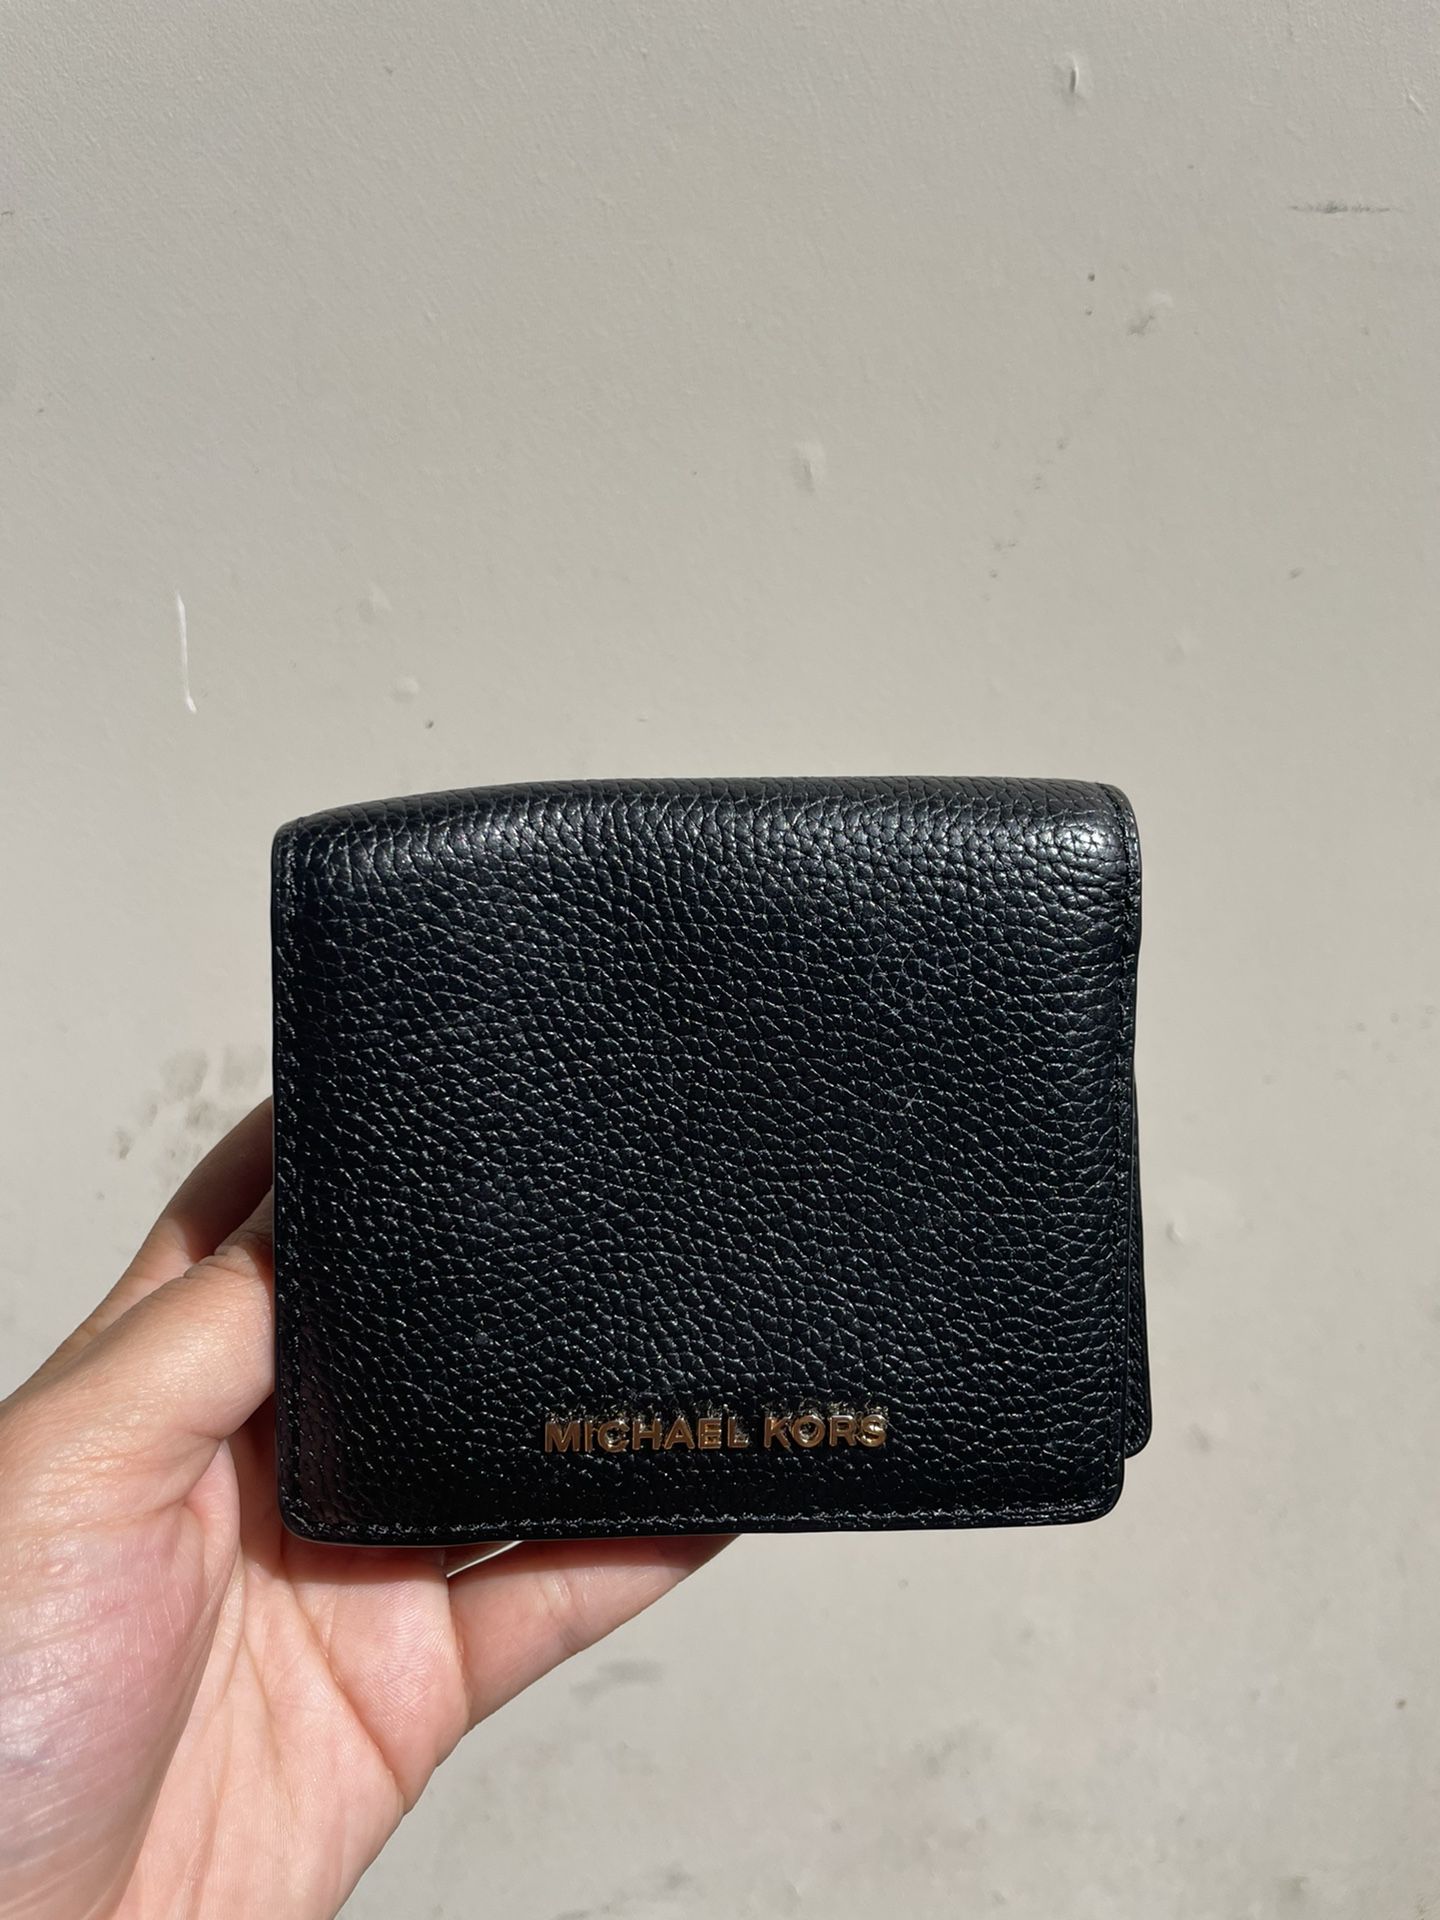 Black Michael Kors Wallet 